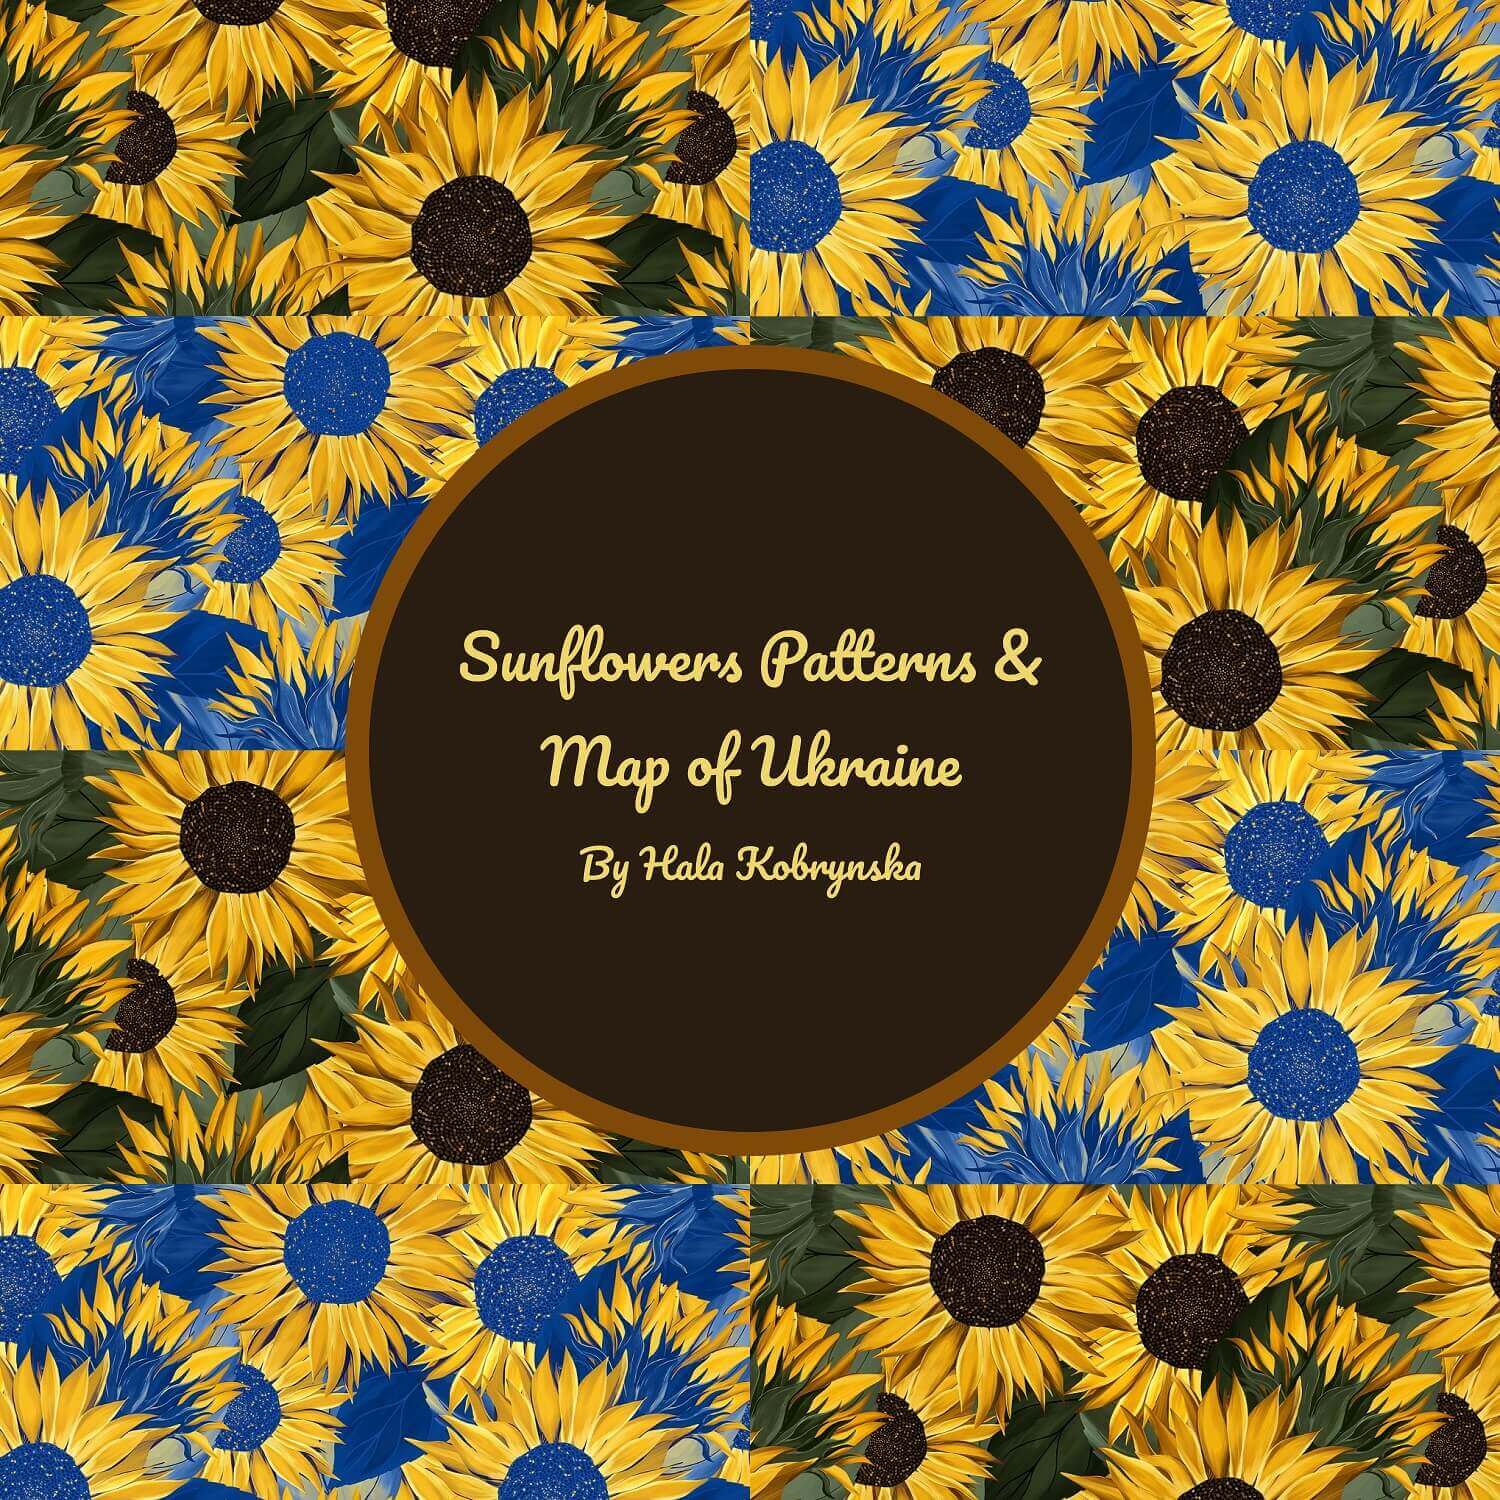 Ukrainian Handwriting Book: Master Ukrainian Cursive (Workbook In Color!